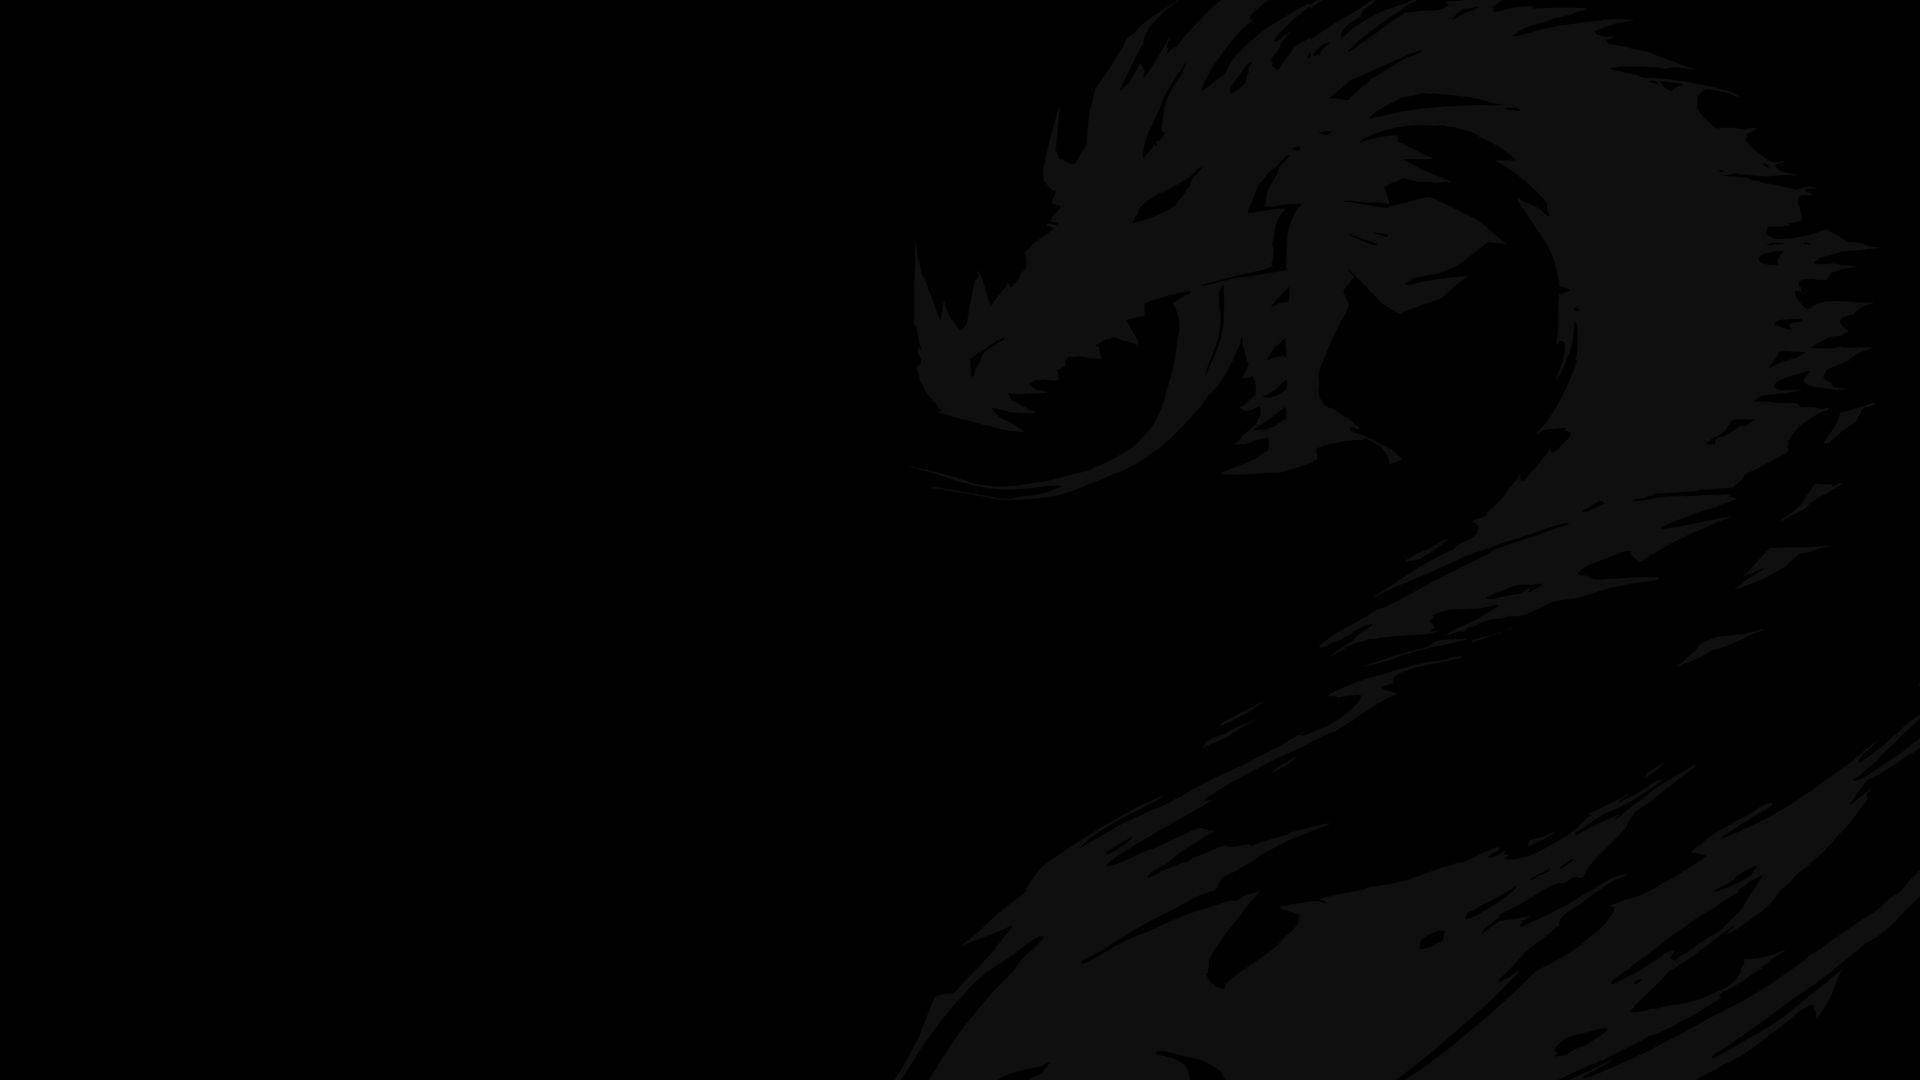 Pure Black Dragon Graphic Background